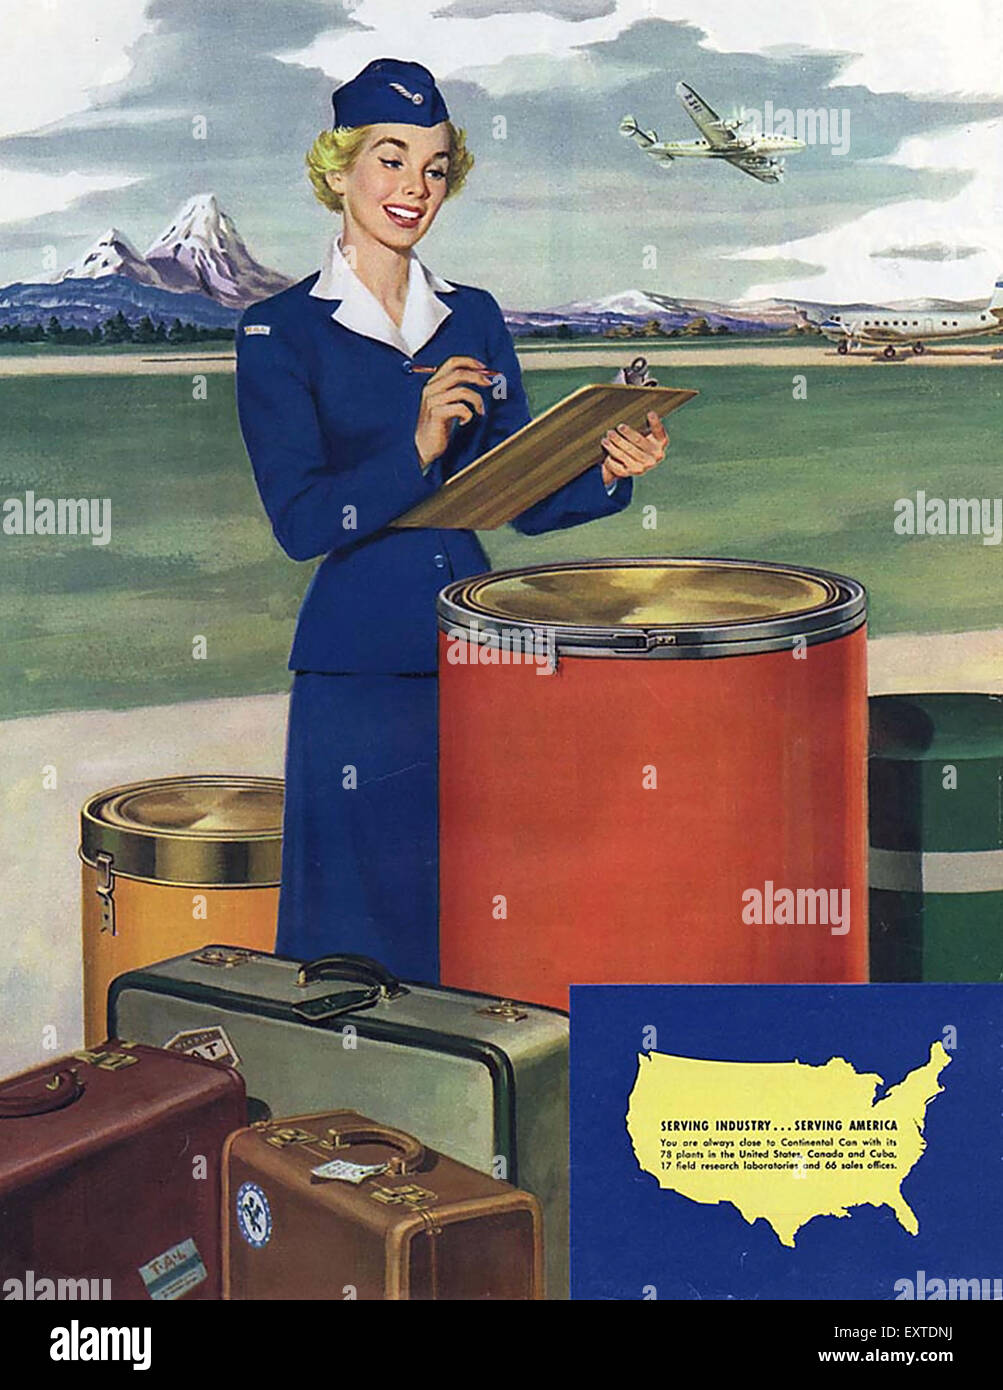 1950s USA Airlines Magazine Advert Stock Photo